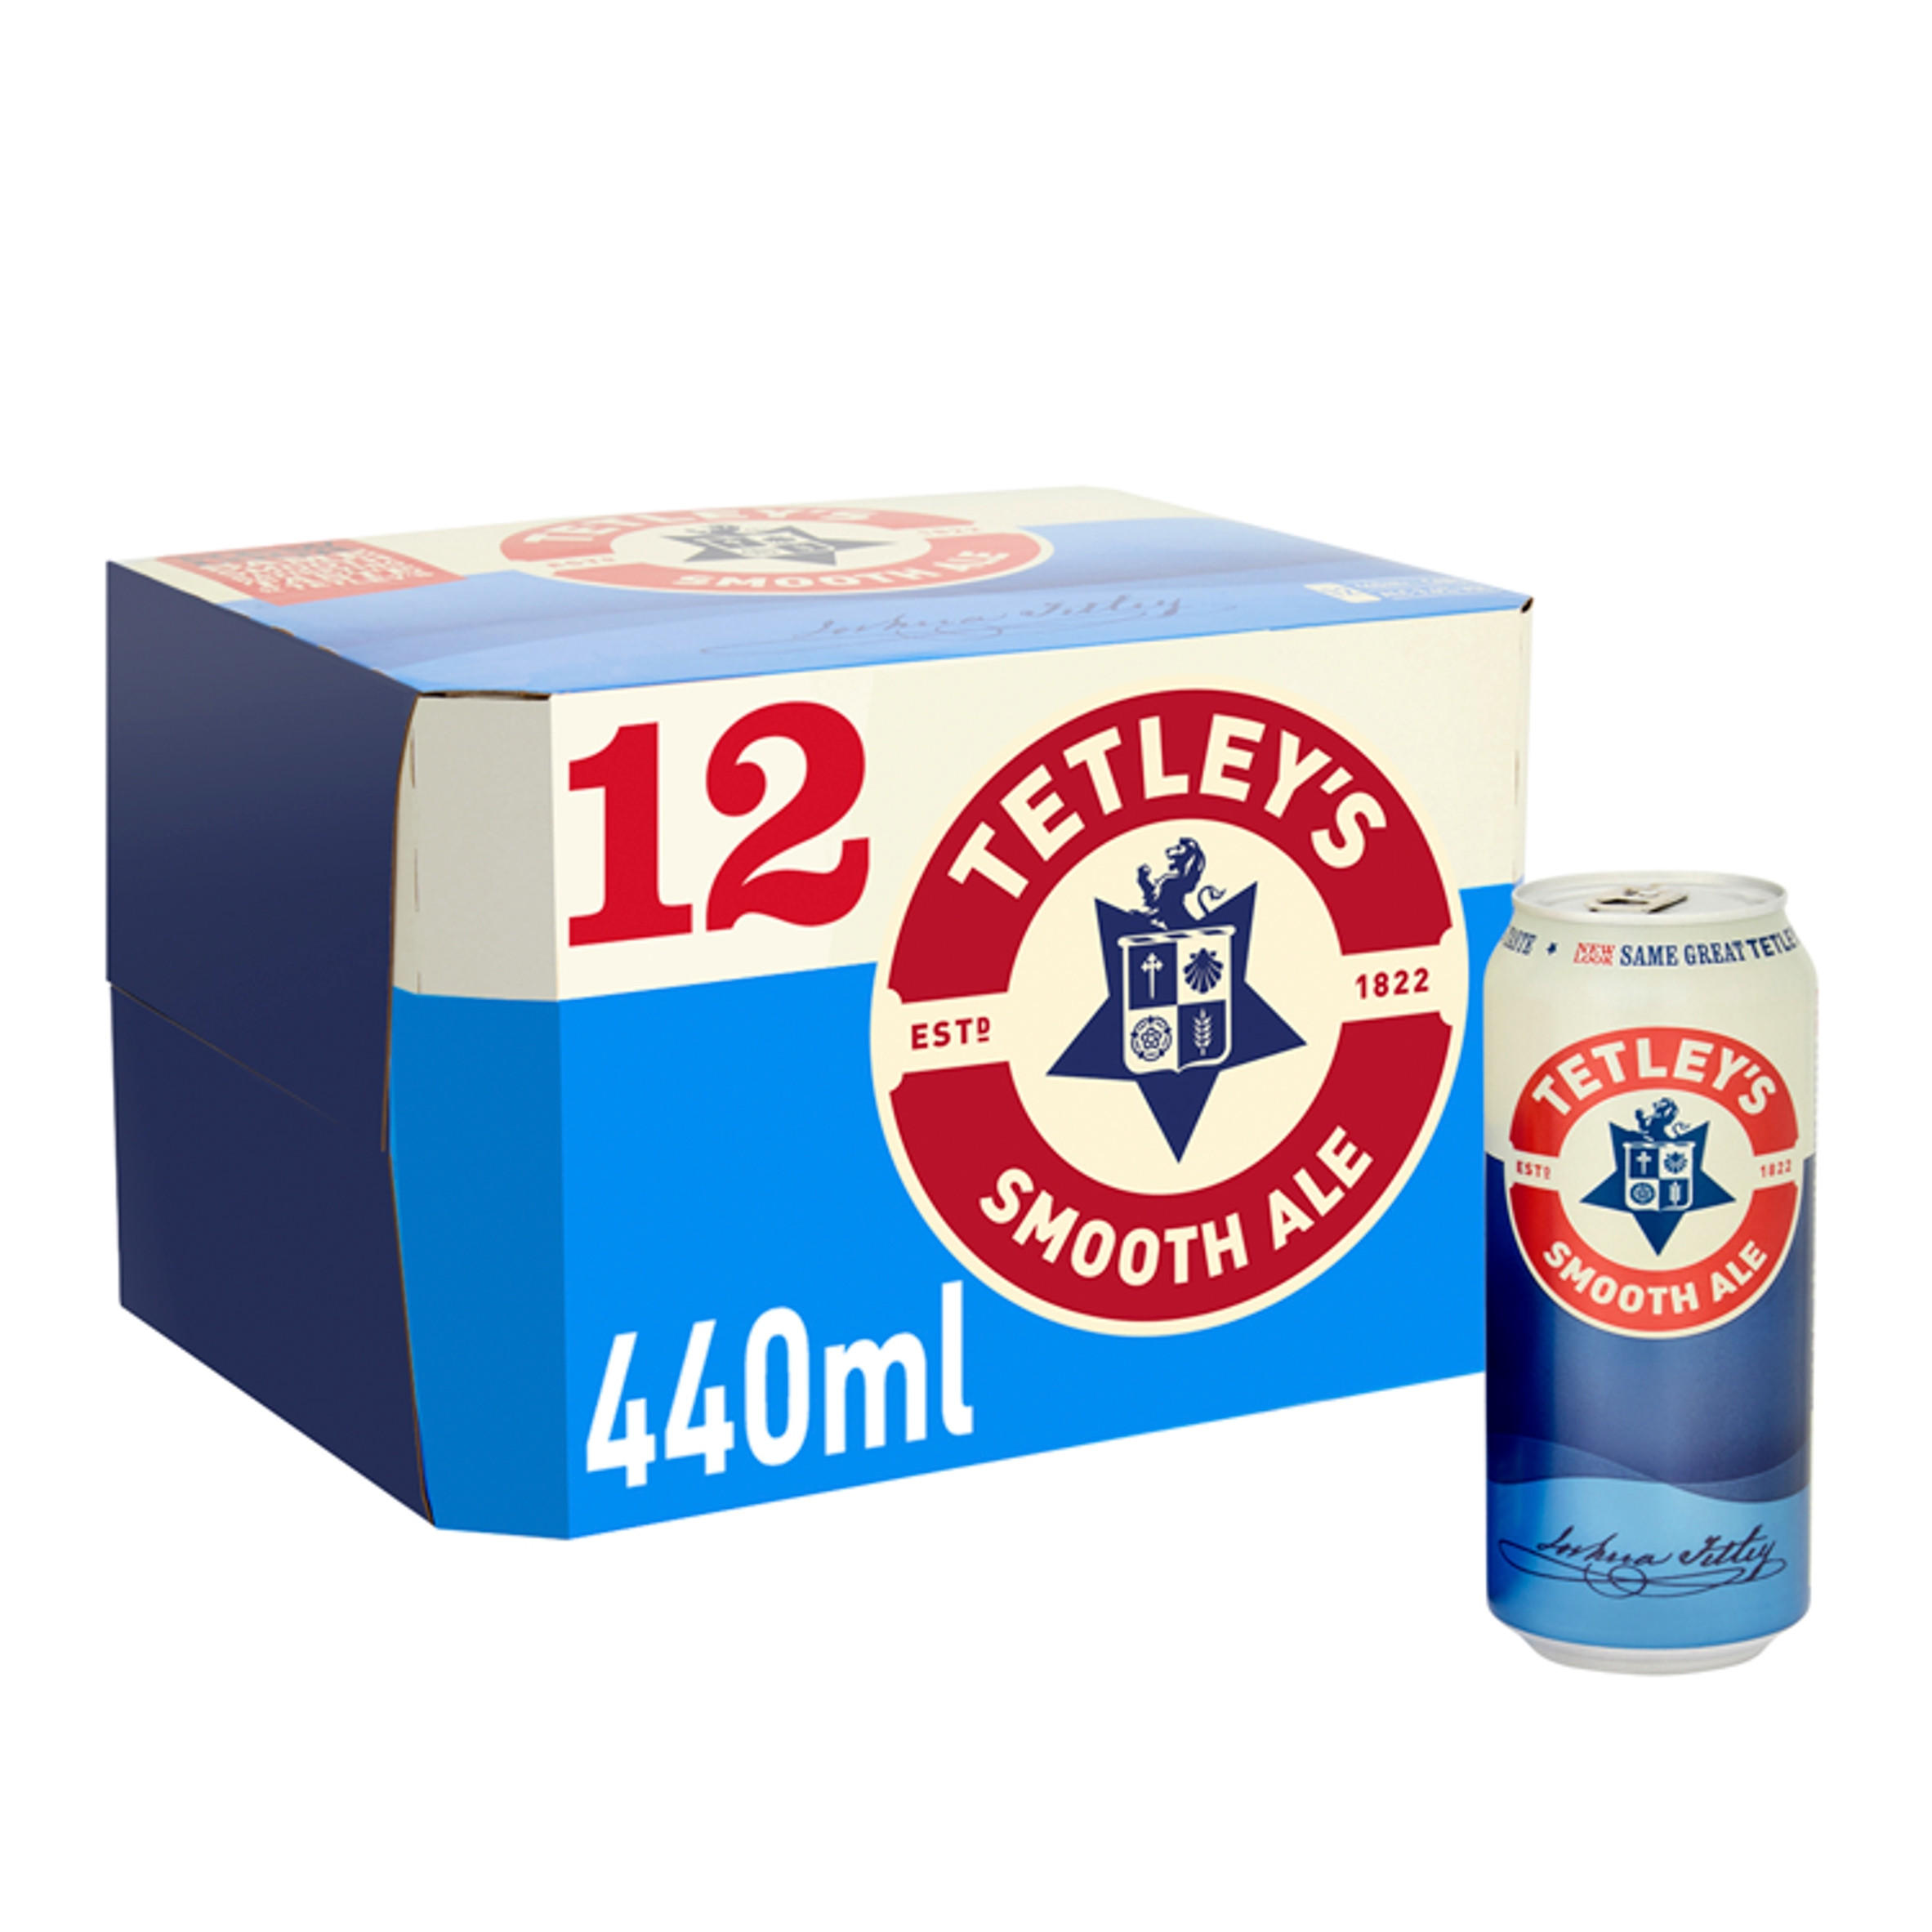 Tetley's Smooth Ale Beer 12 x 440ml Cans | Beer | Iceland Foods